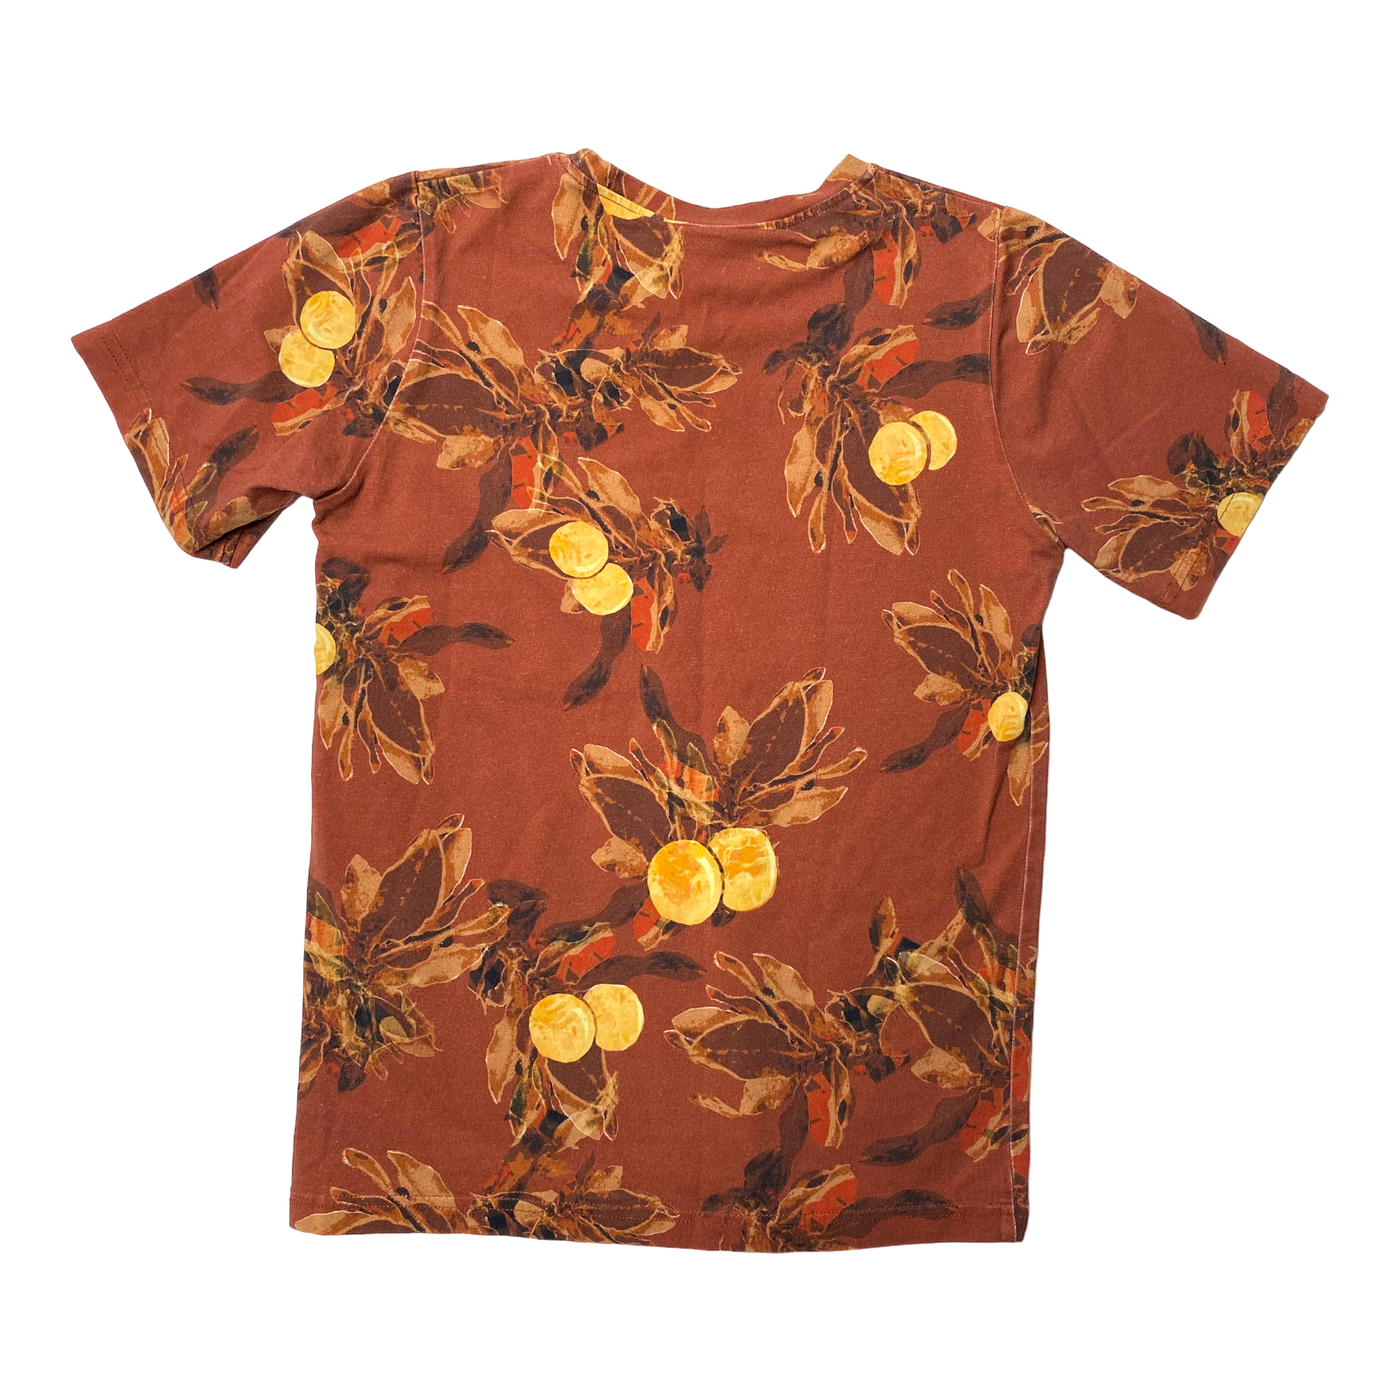 Kaiko t-shirt, flower | 146/152cm